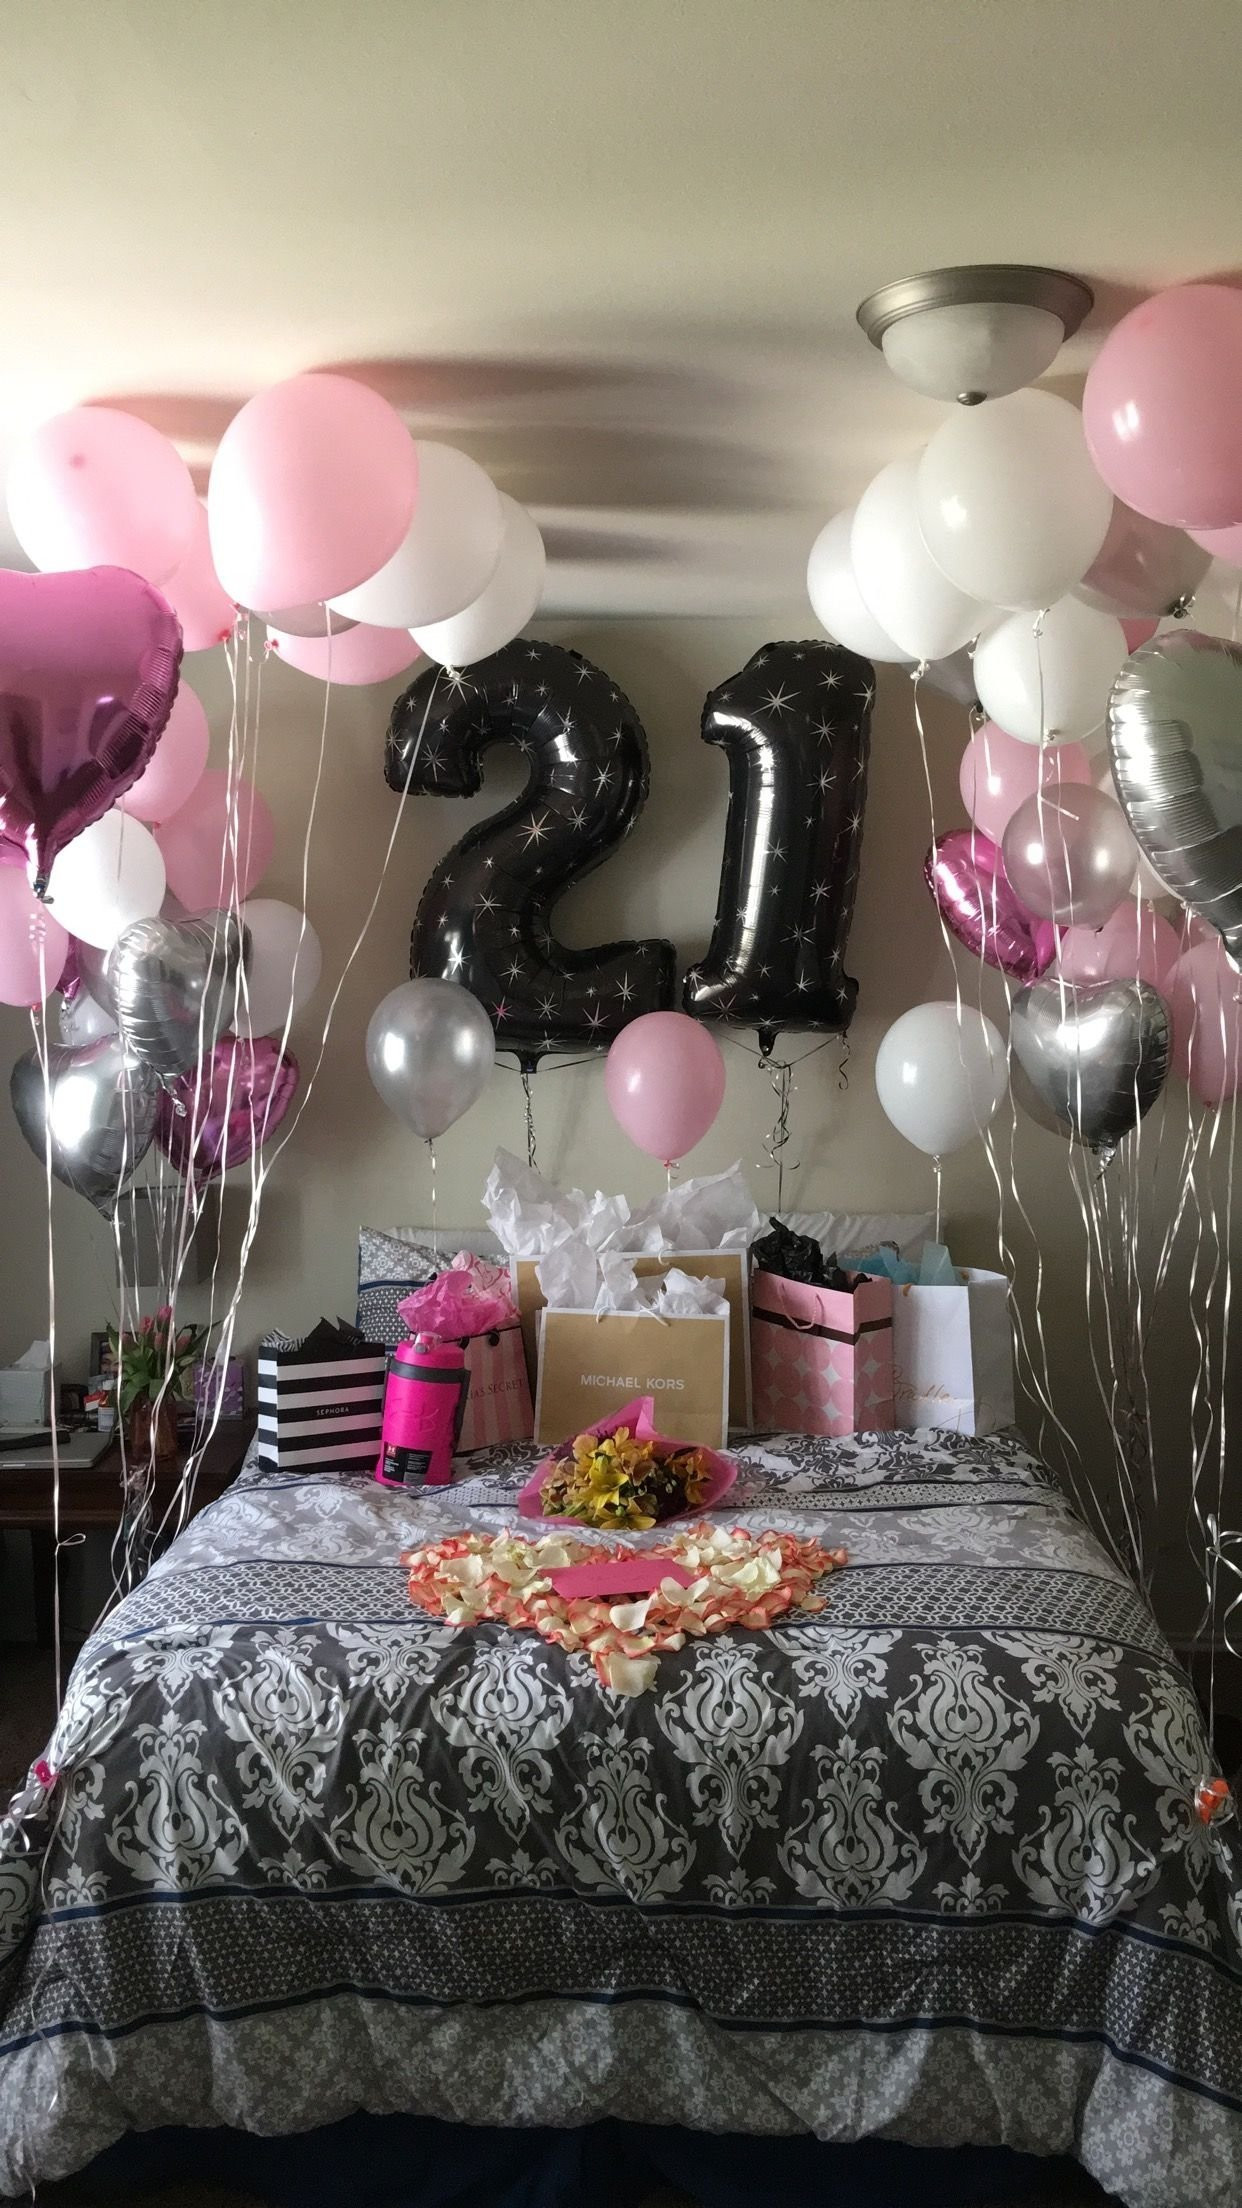 Creative Birthday Gift Ideas For Girlfriend
 10 Fashionable Birthday Surprise Ideas For Girlfriend 2020